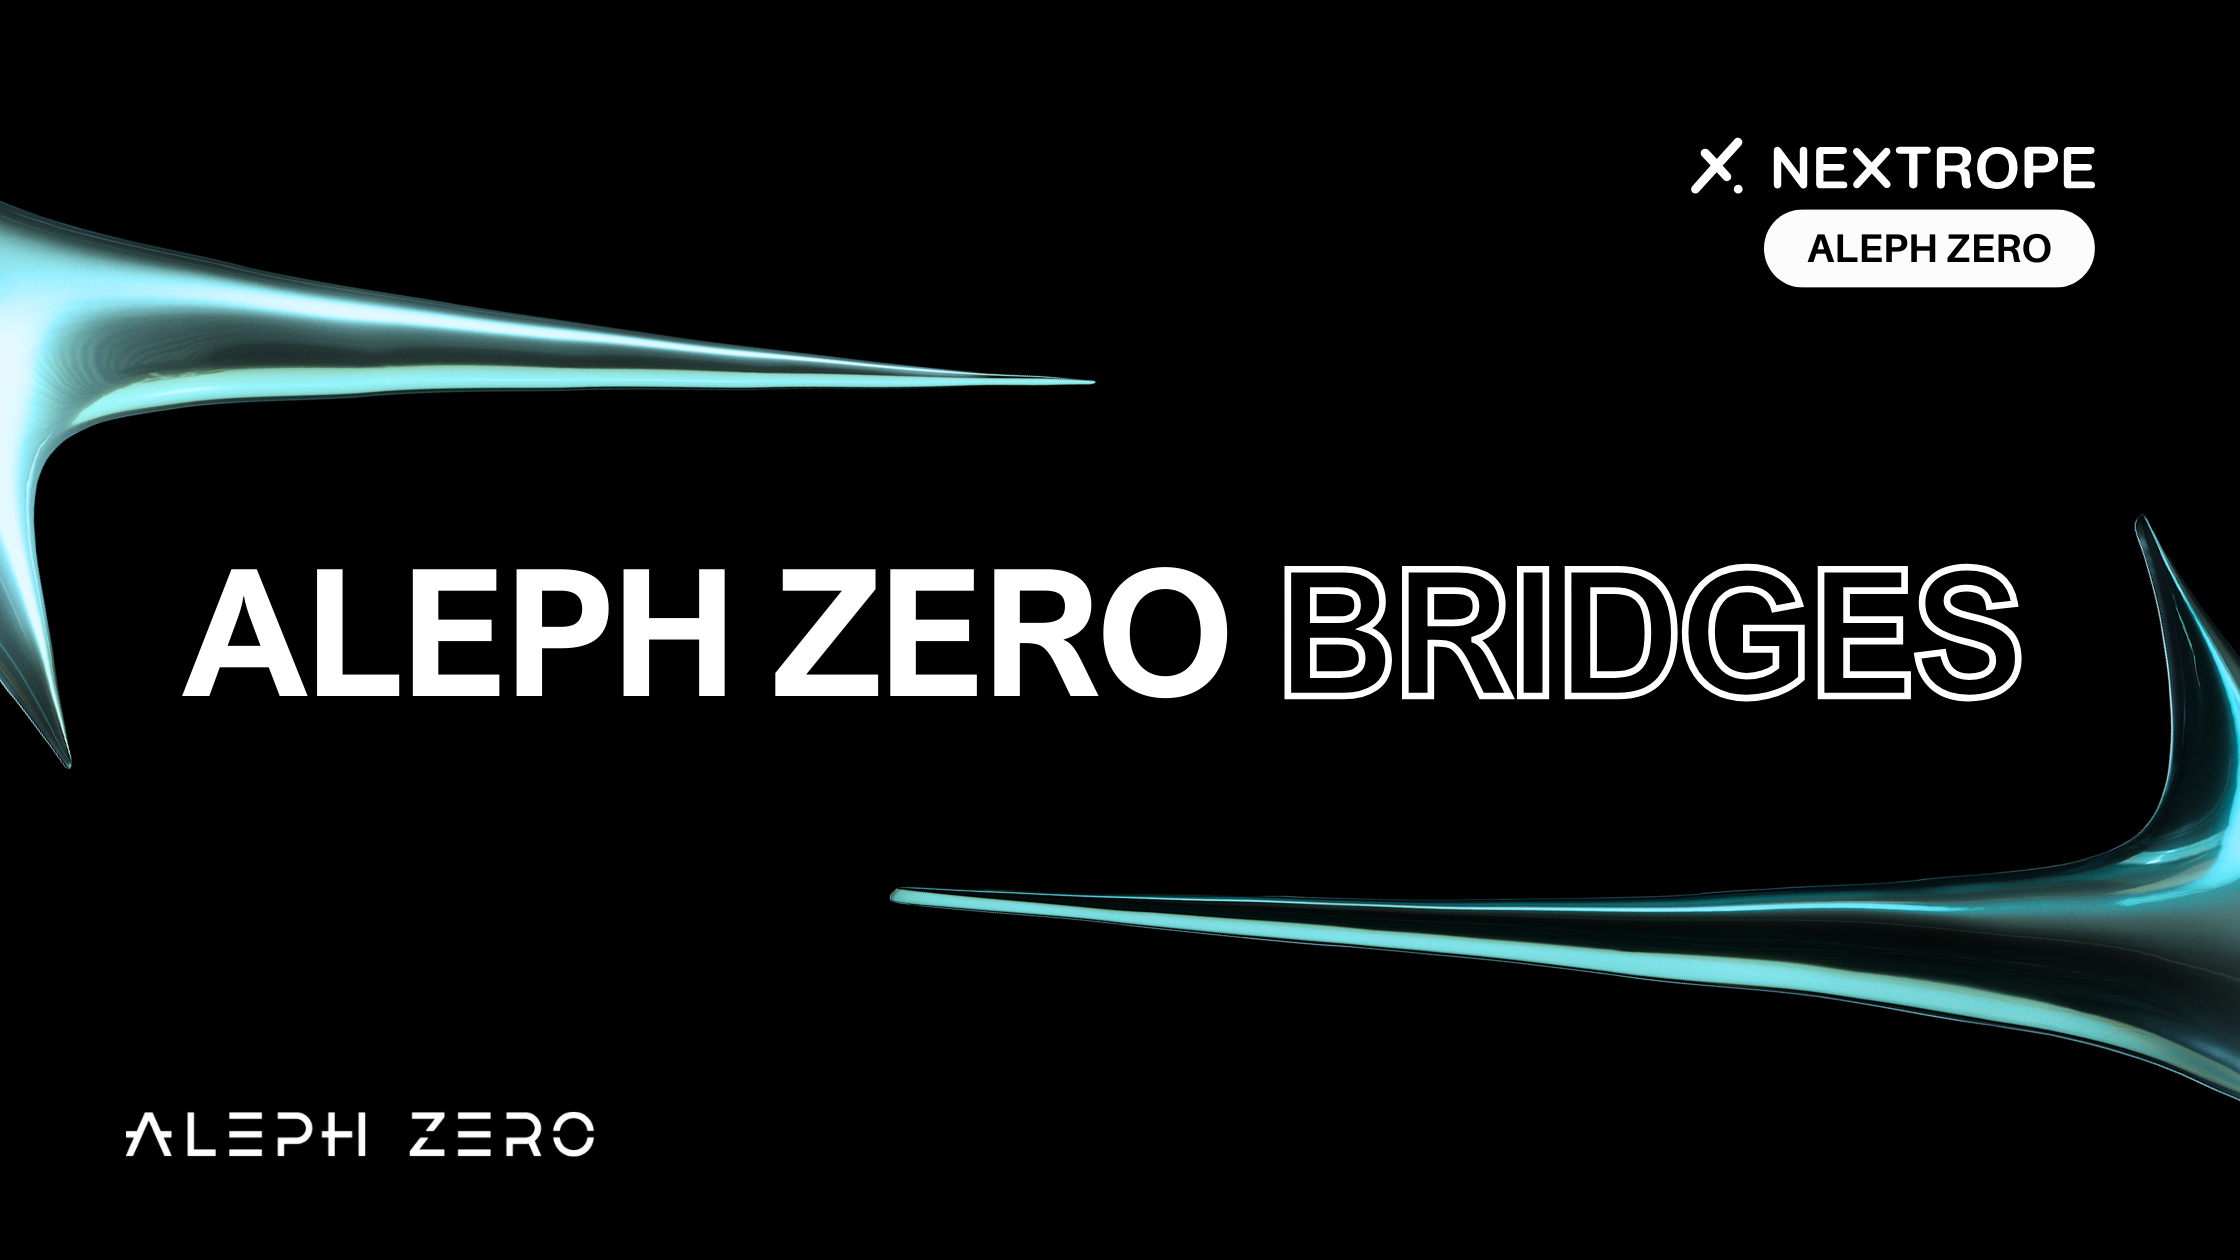 Aleph Zero Bridges: Interoperability with Ethereum